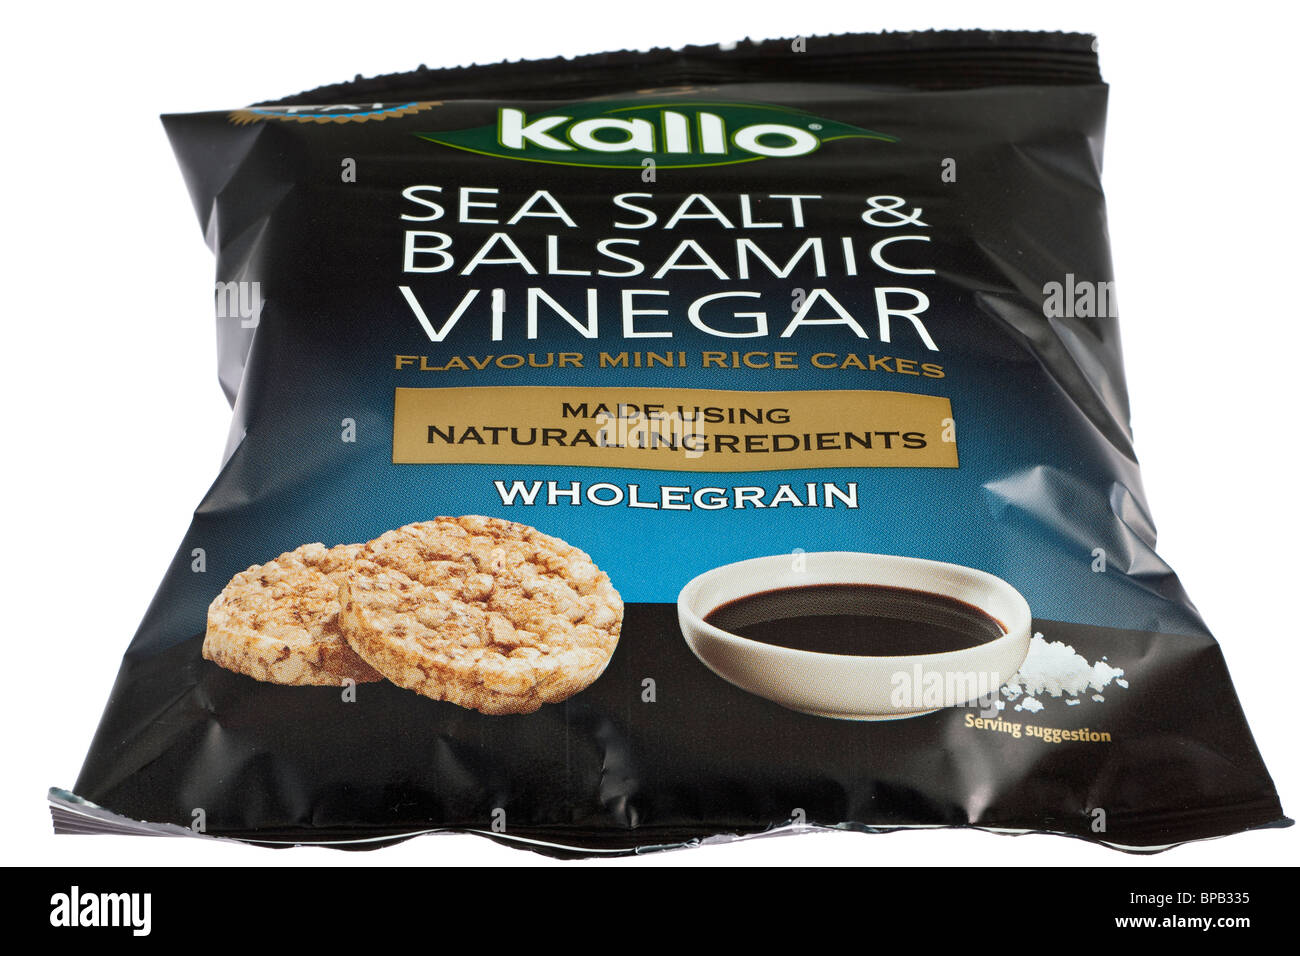 Black packet of Kallo sea salted and balsamic vinegar flavoured wholegrain mini rice cakes Stock Photo